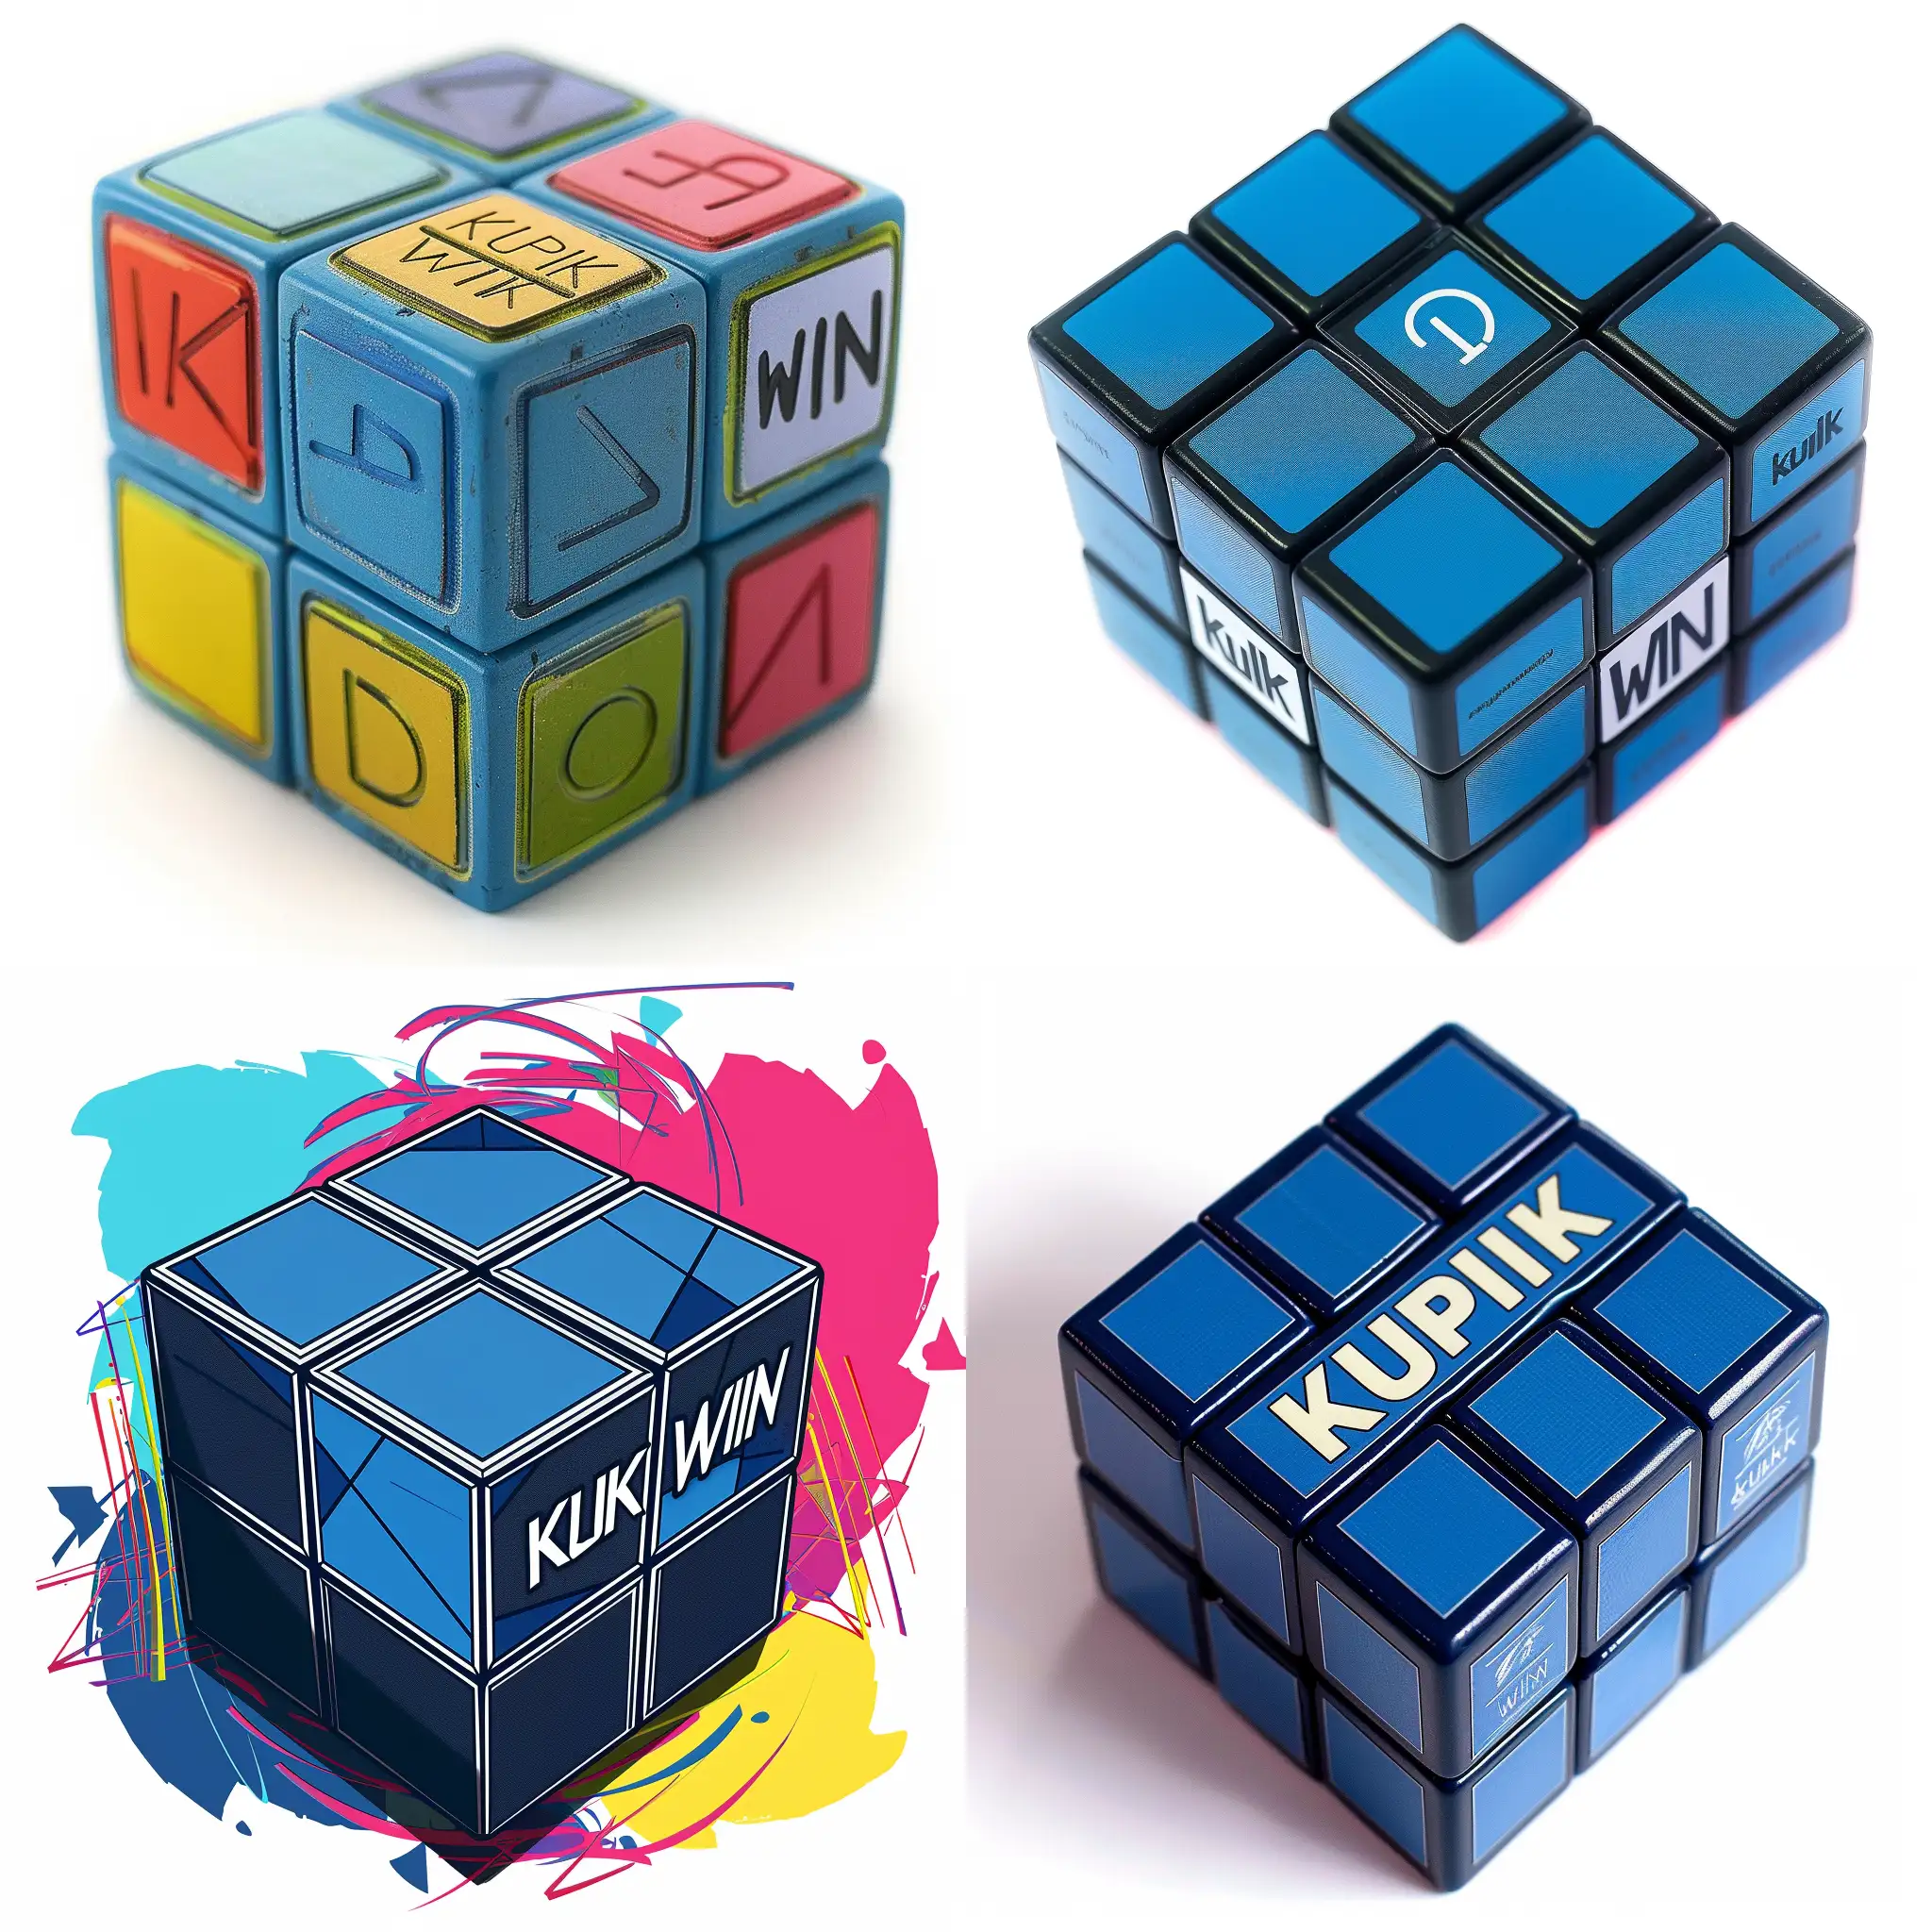 Colorful-Cube-Art-Vibrant-Blue-Geometric-Sculpture-with-kubik-win-Inscription